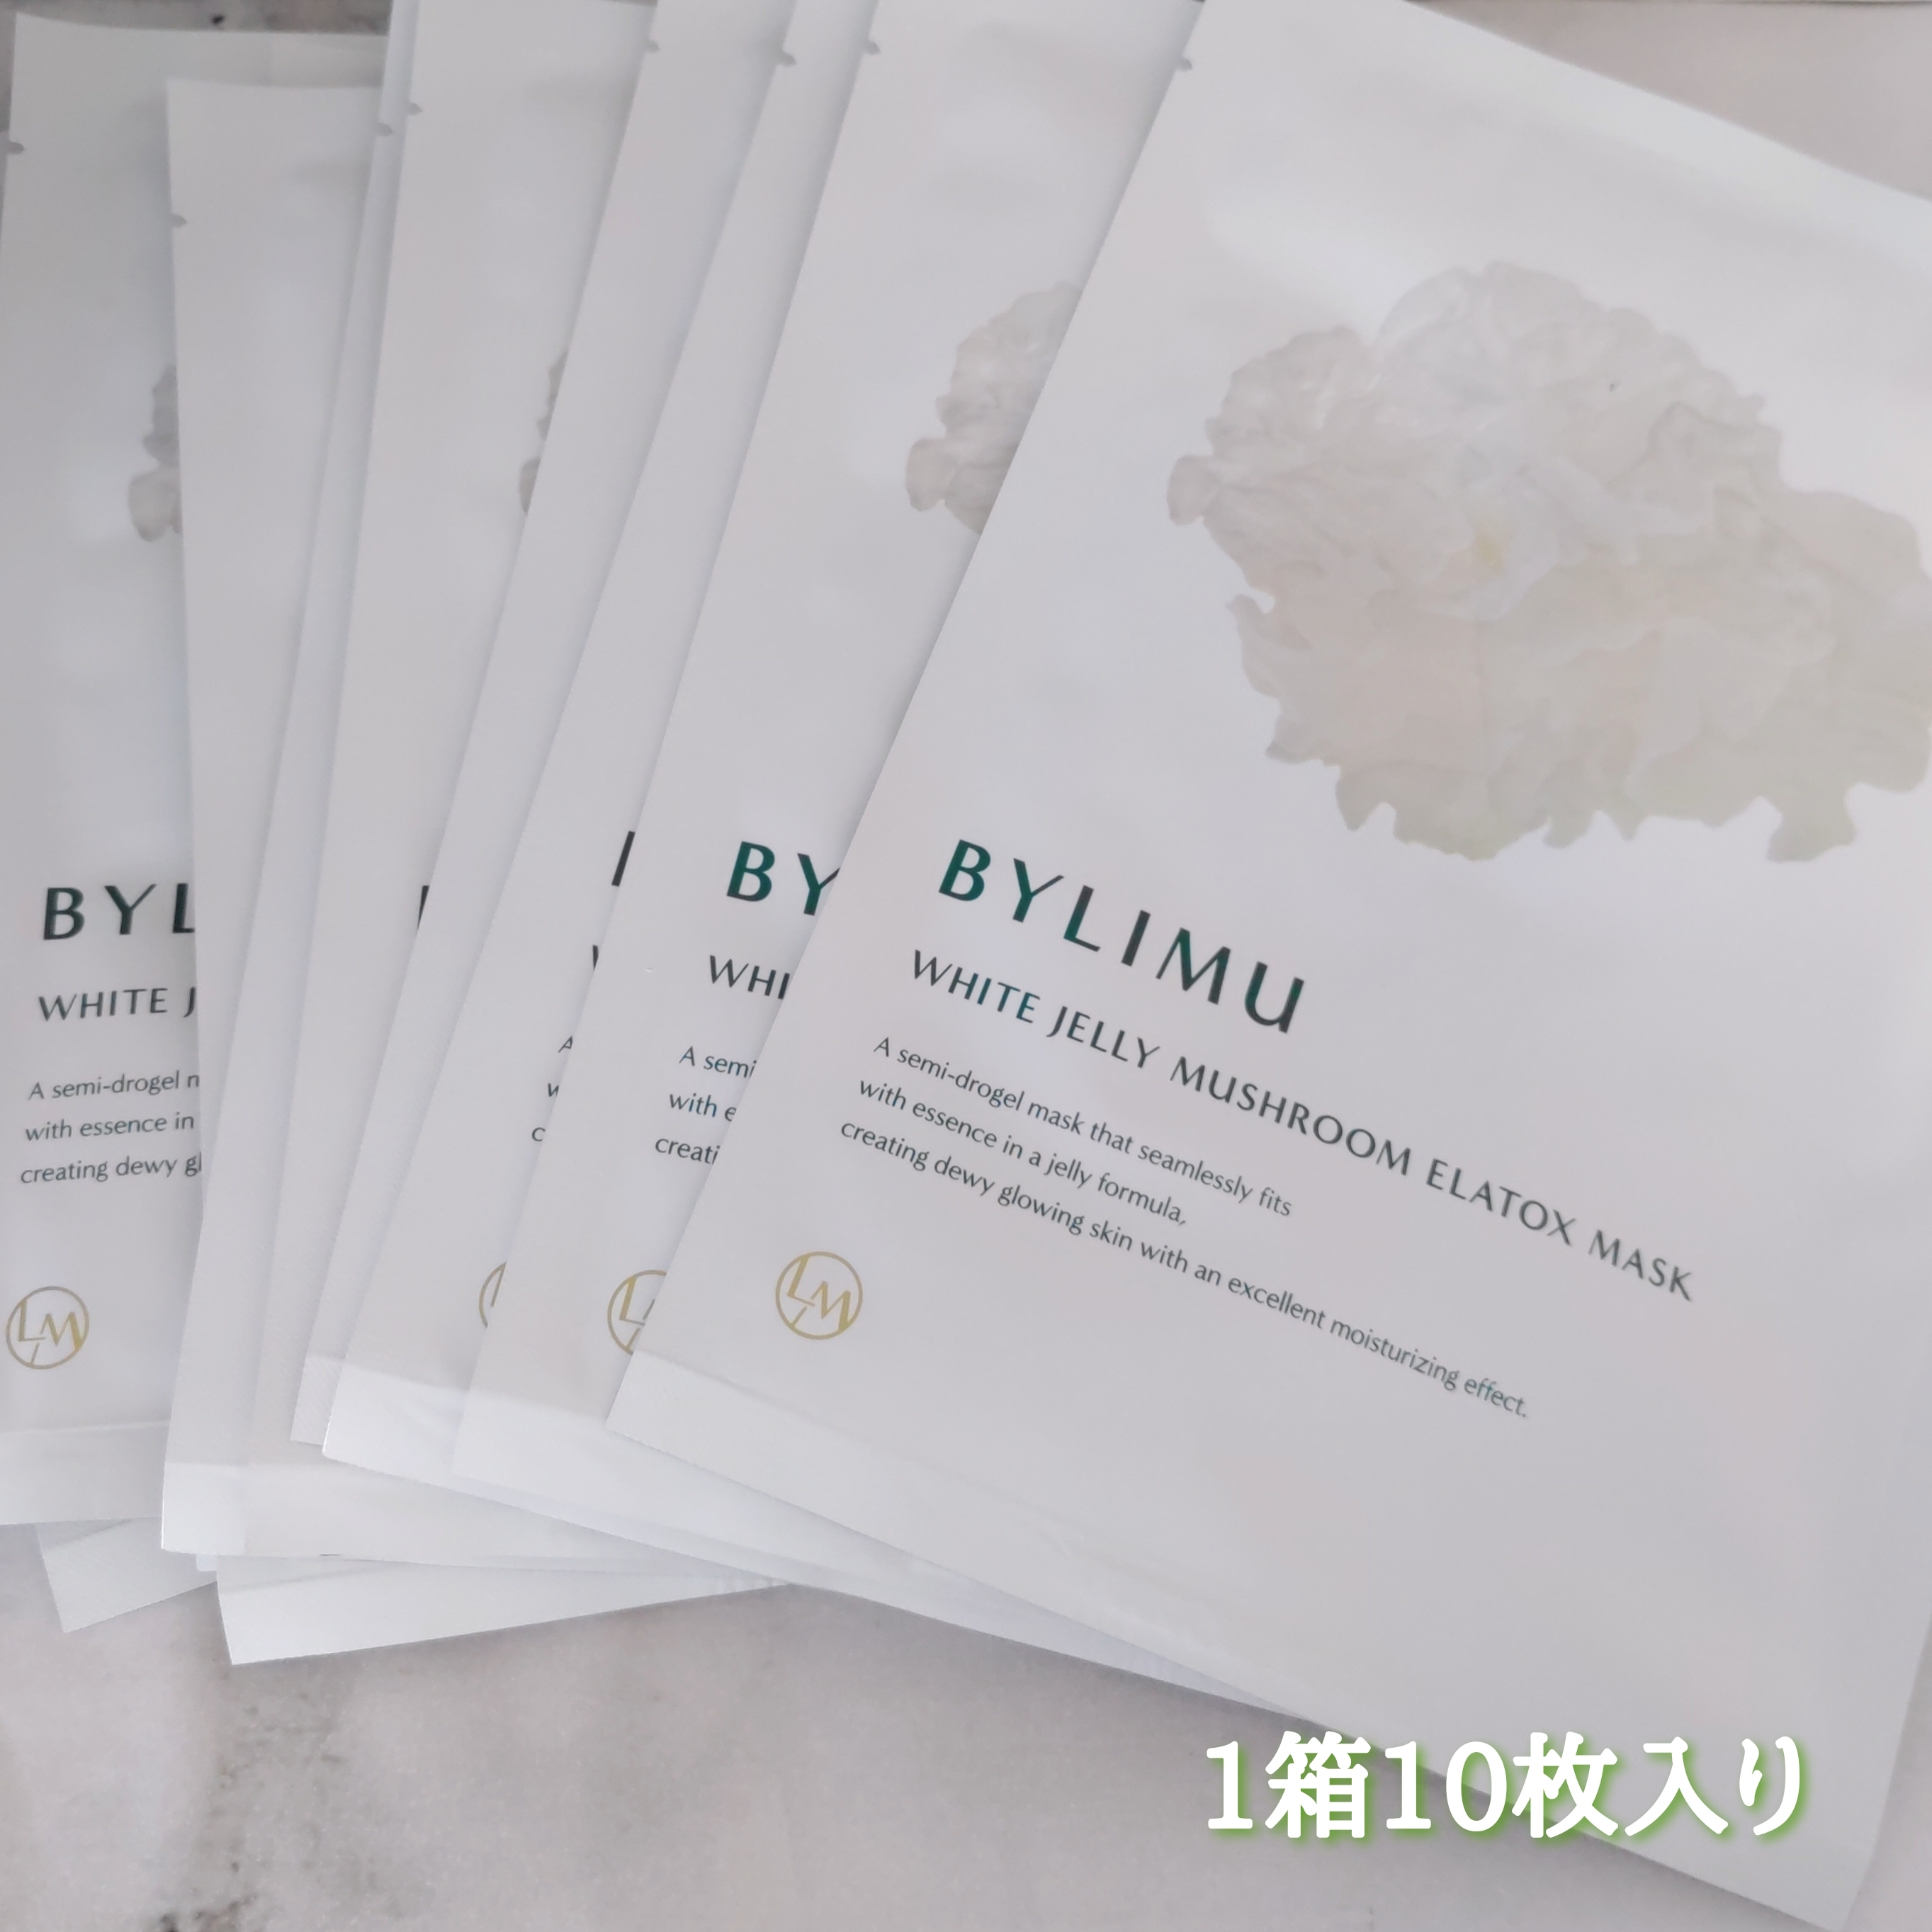 BYLIMU(バイリミュー) ホワイト ゼリー マッシュルーム エラトックス マスクの良い点・メリットに関するYuKaRi♡さんの口コミ画像2